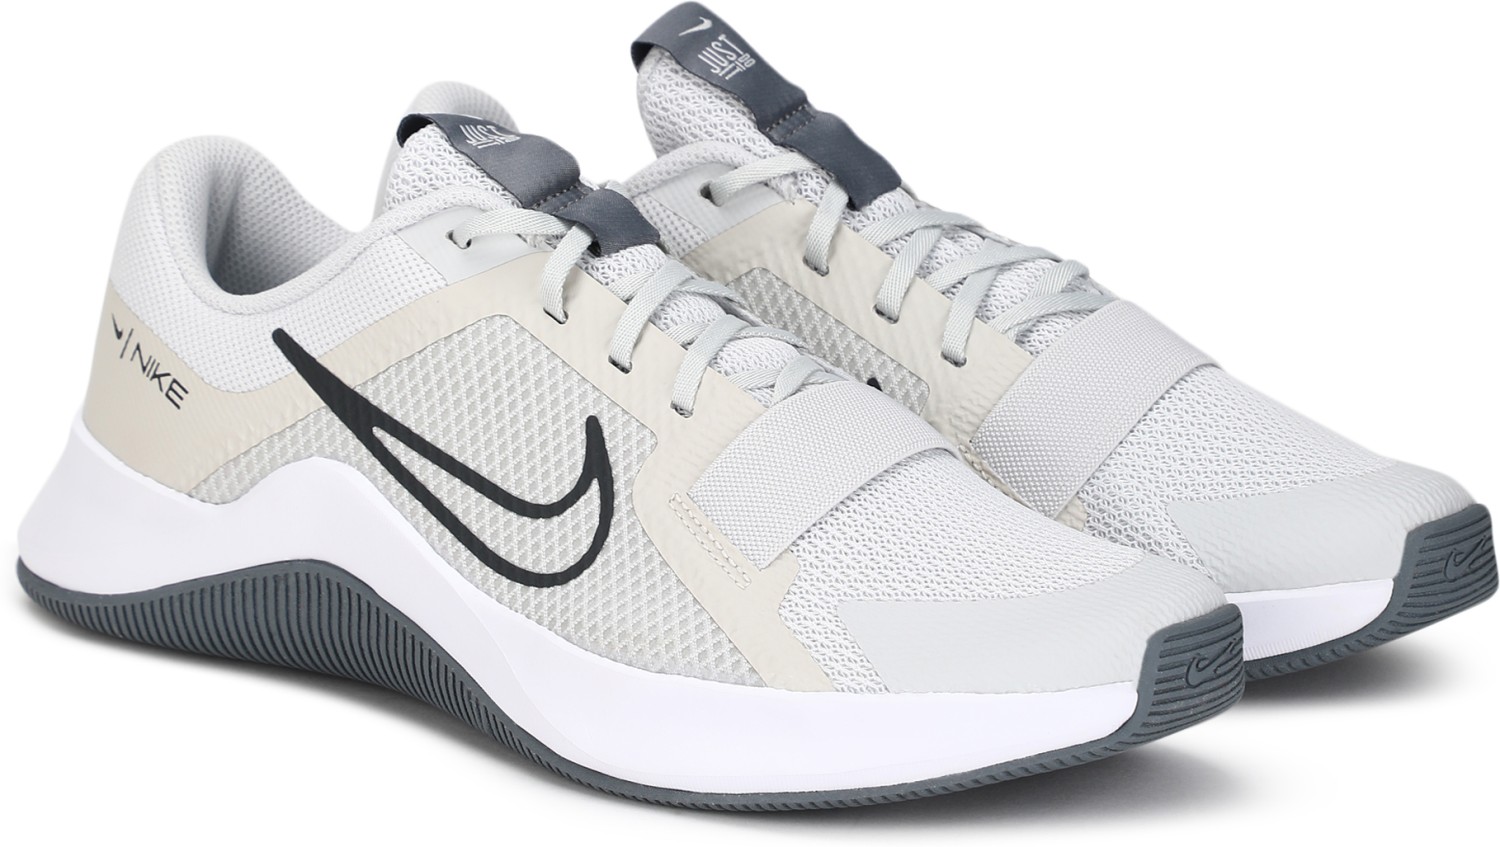 Nike Men's MC Trainer 2 Shoe